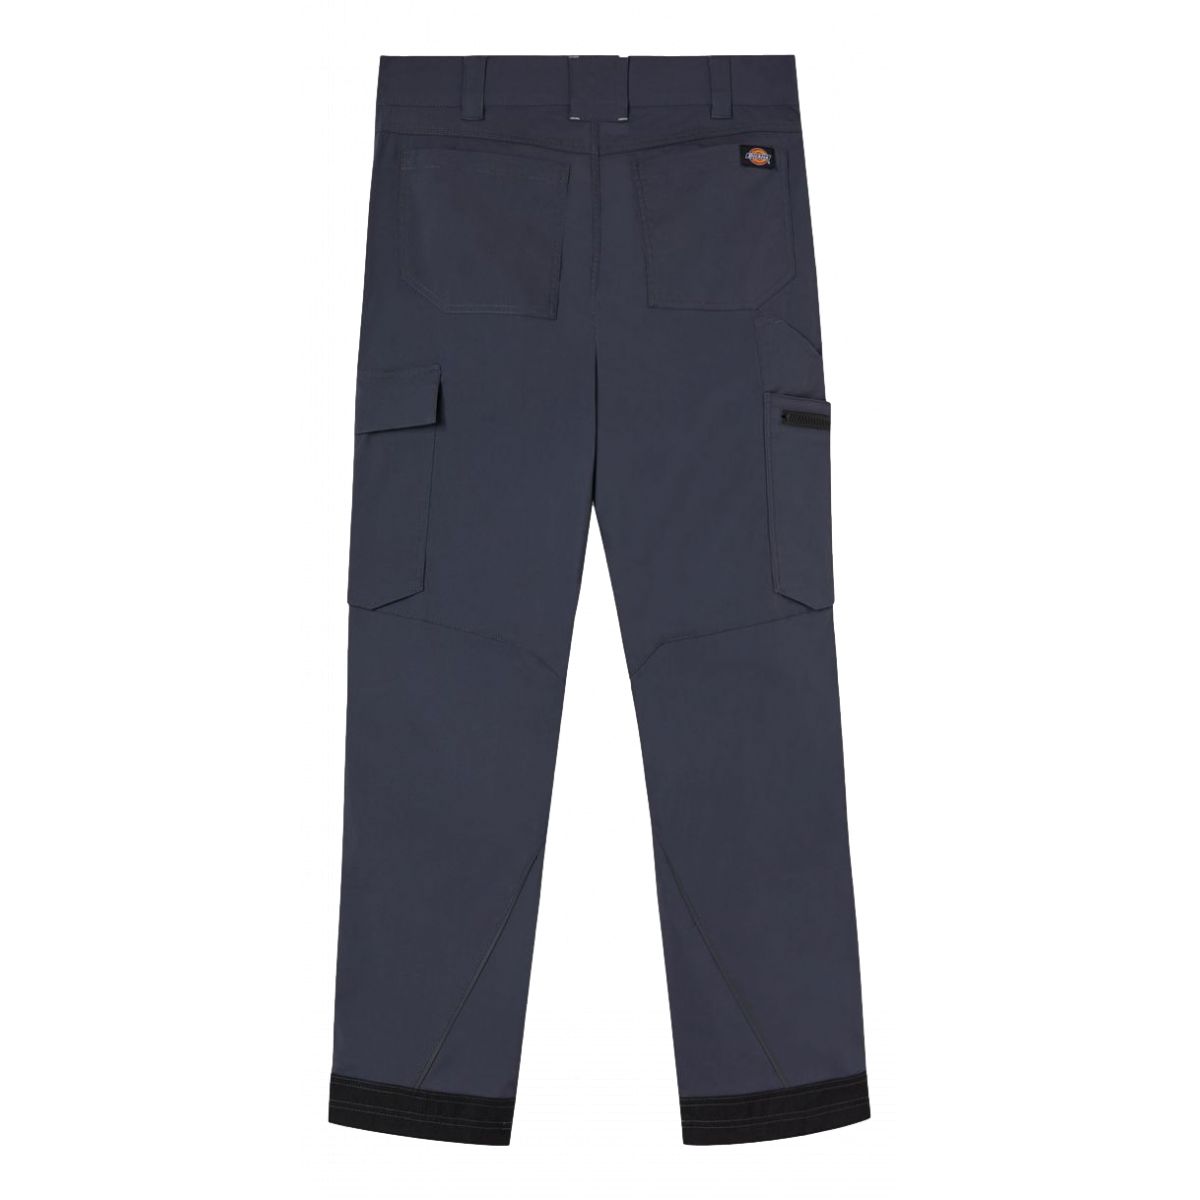 Pantalon léger Flex Gris - Dickies - Taille 42 1